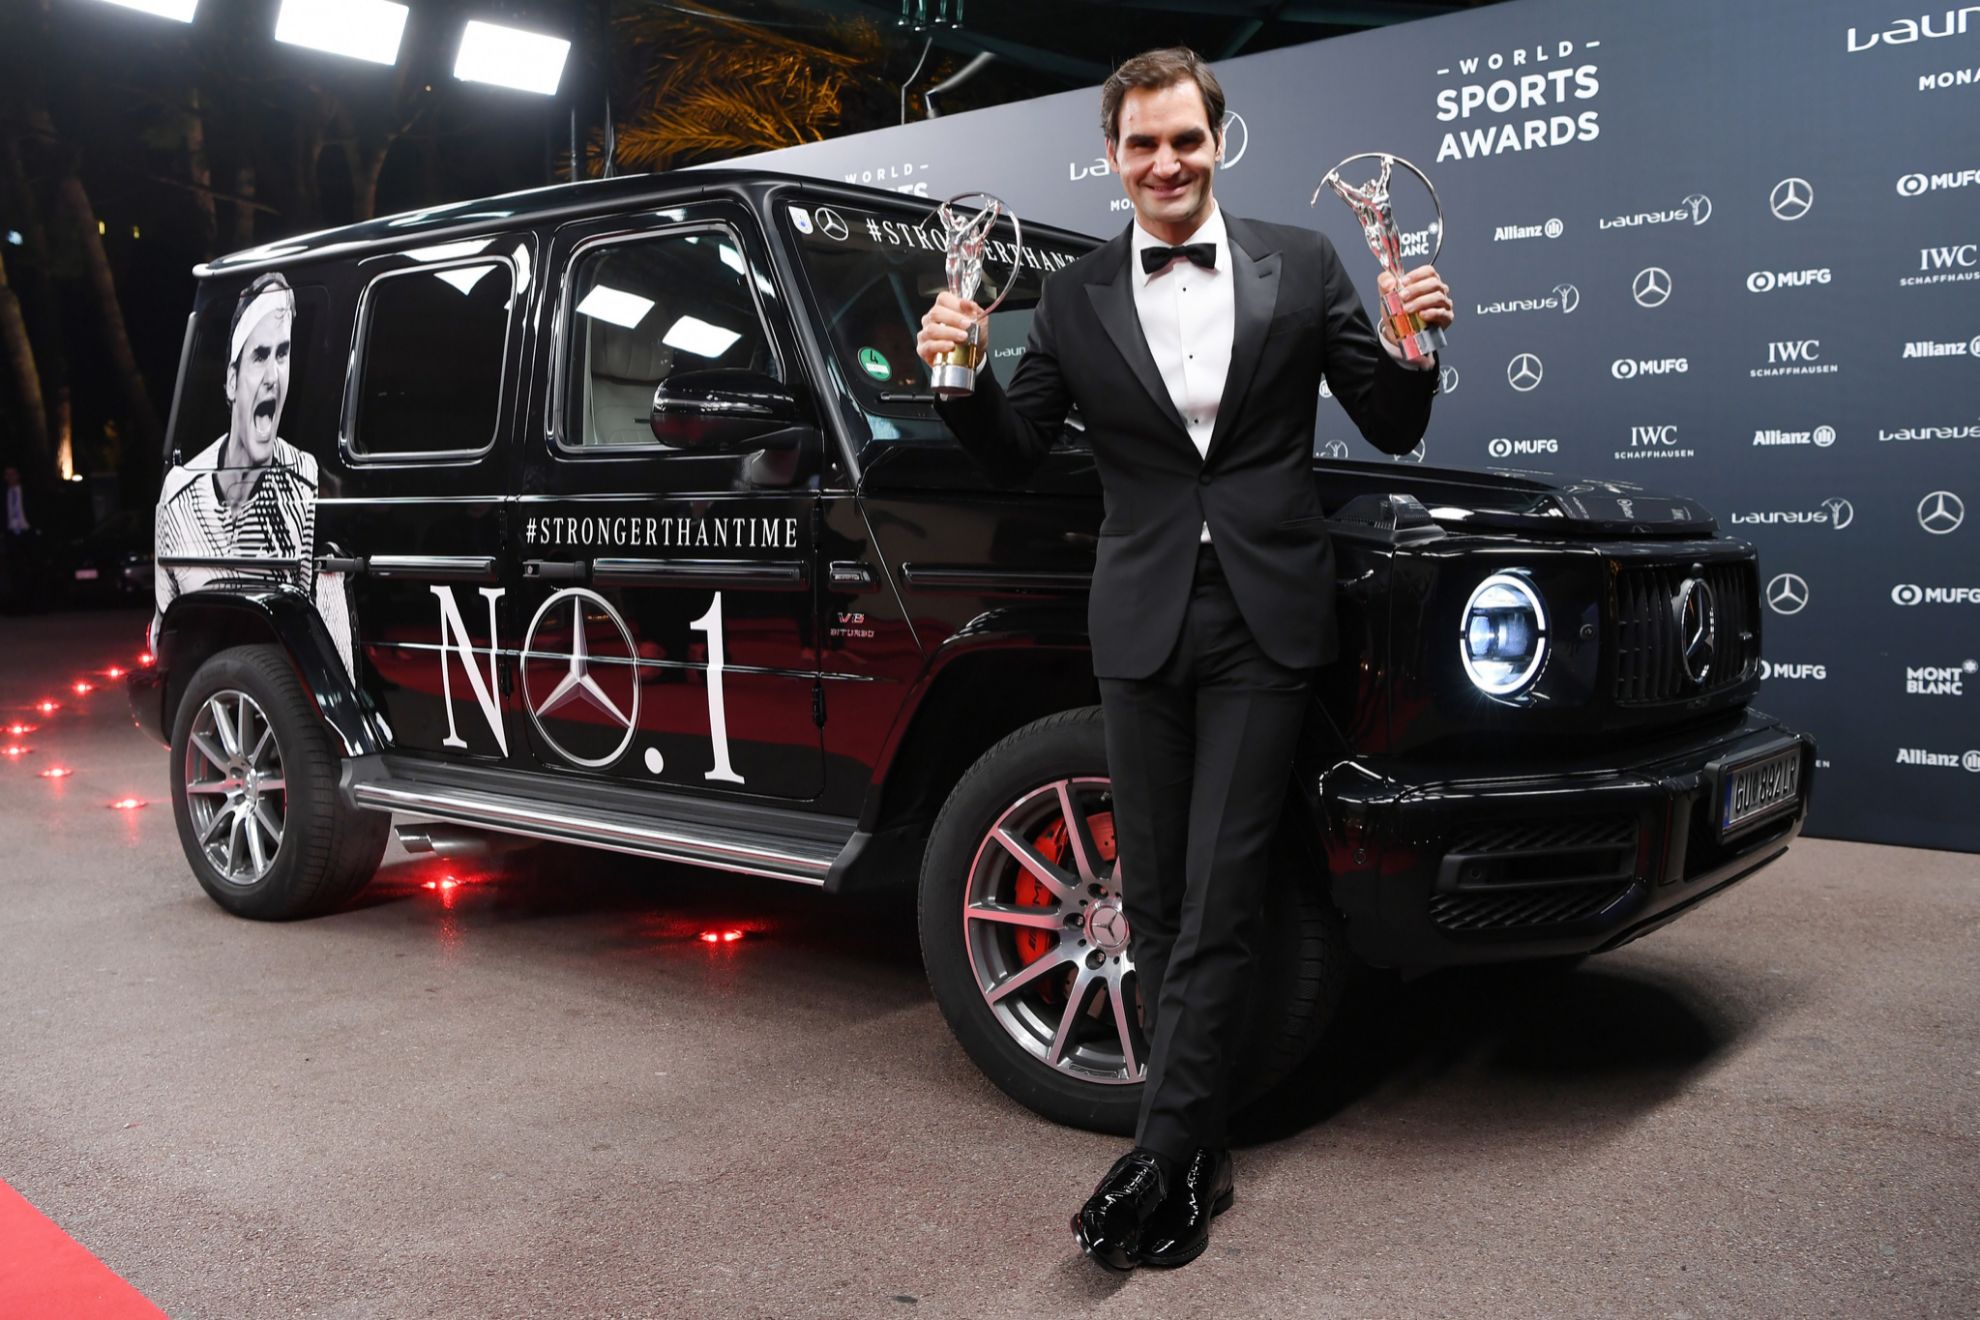 La increble coleccin de coches de Roger Federer: sus espectaculares  Mercedes-Benz